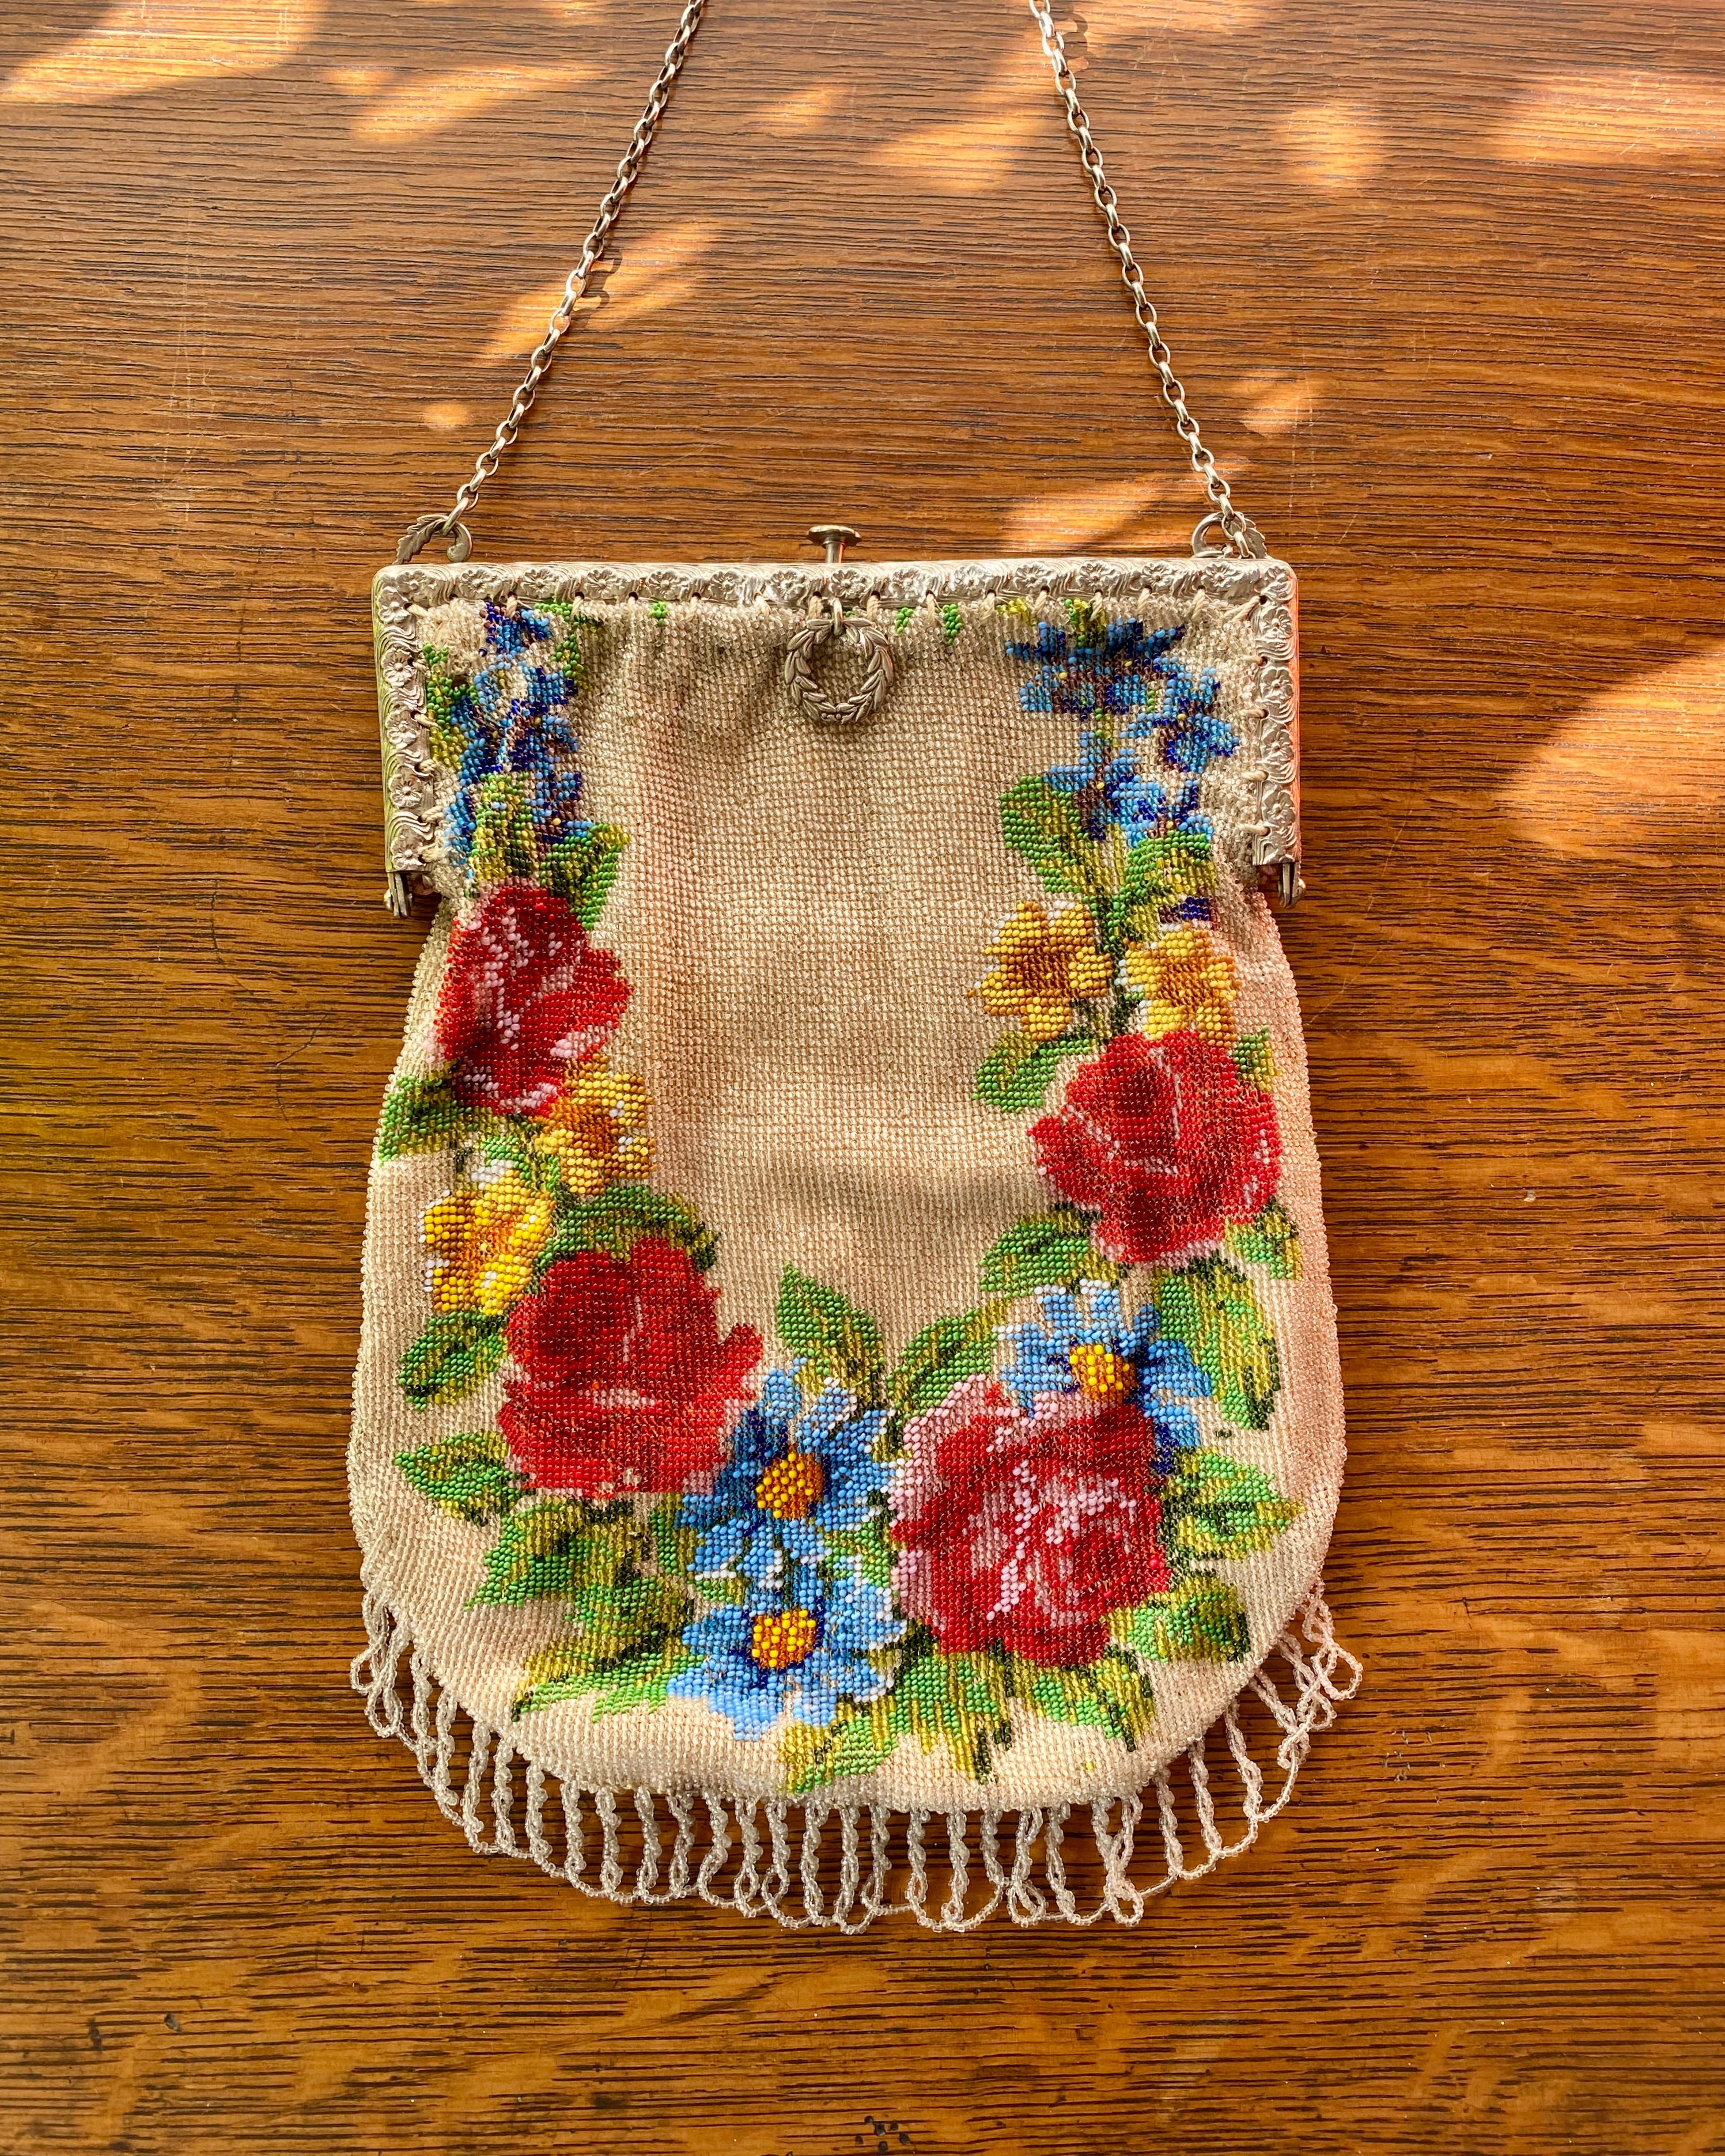 Antique 1900 Wreath Floral Micro Beaded Purse Handbag with Tassels